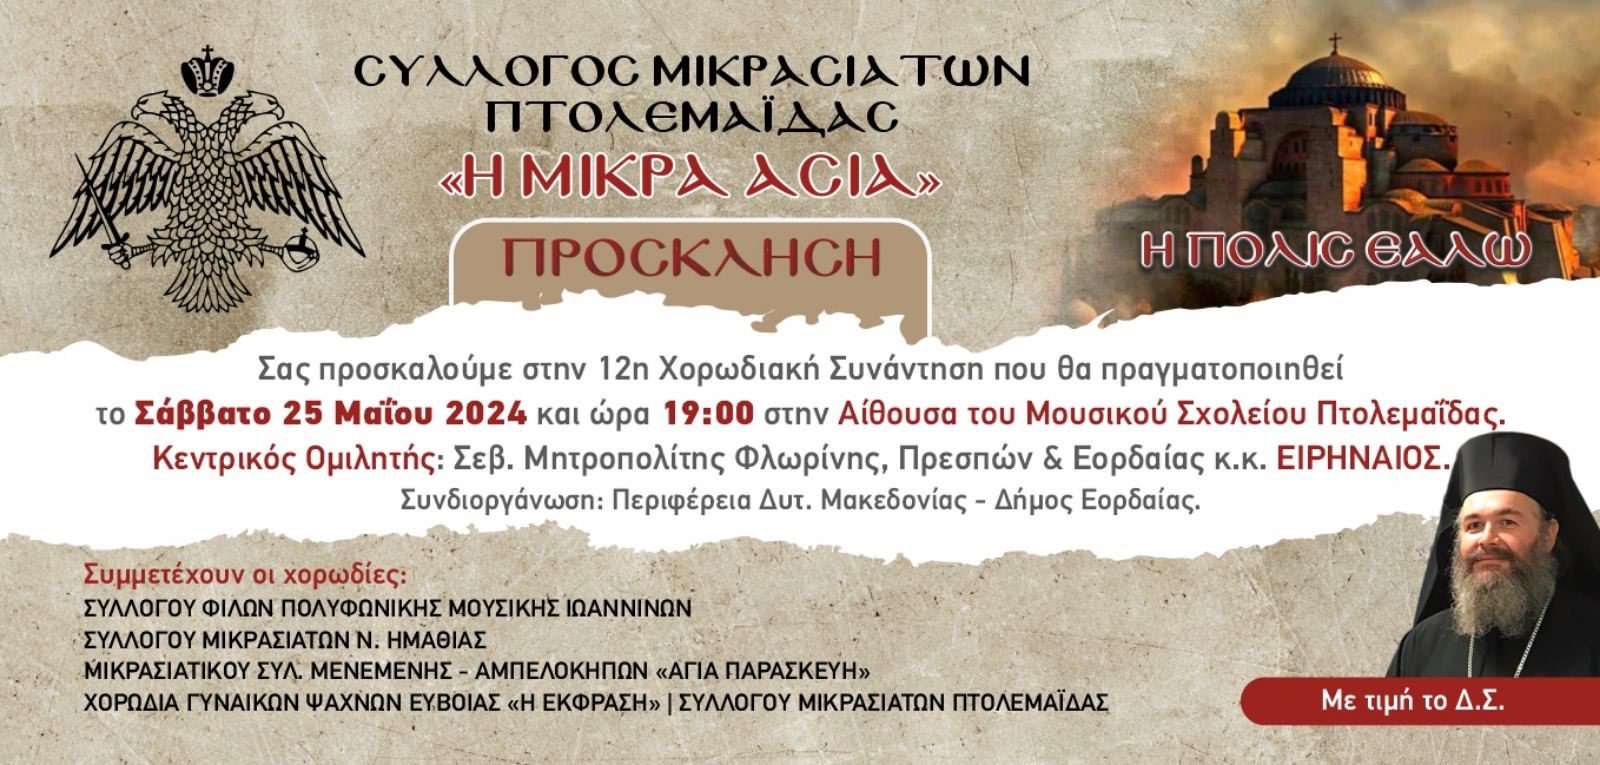 Eordaialive.com - Τα Νέα της Πτολεμαΐδας, Εορδαίας, Κοζάνης Ο Σύλλογος Μικρασιατών Πτολεμαΐδας τιμά τη μνήμη των 571 χρόνων από την Άλωση της Κωνσταντινούπολης 